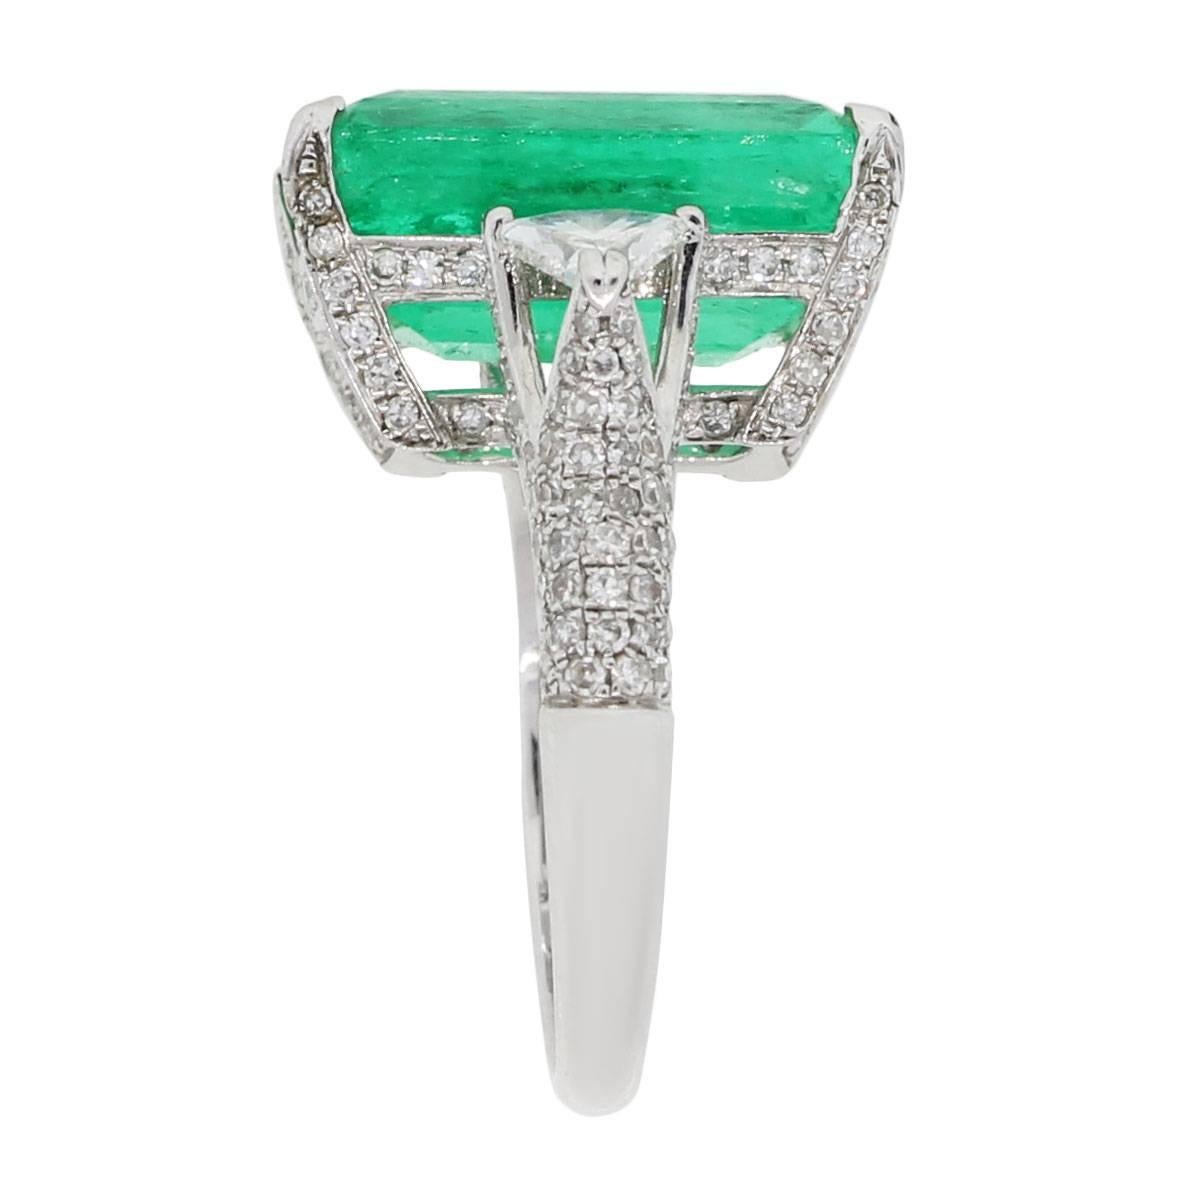 14 carat emerald ring